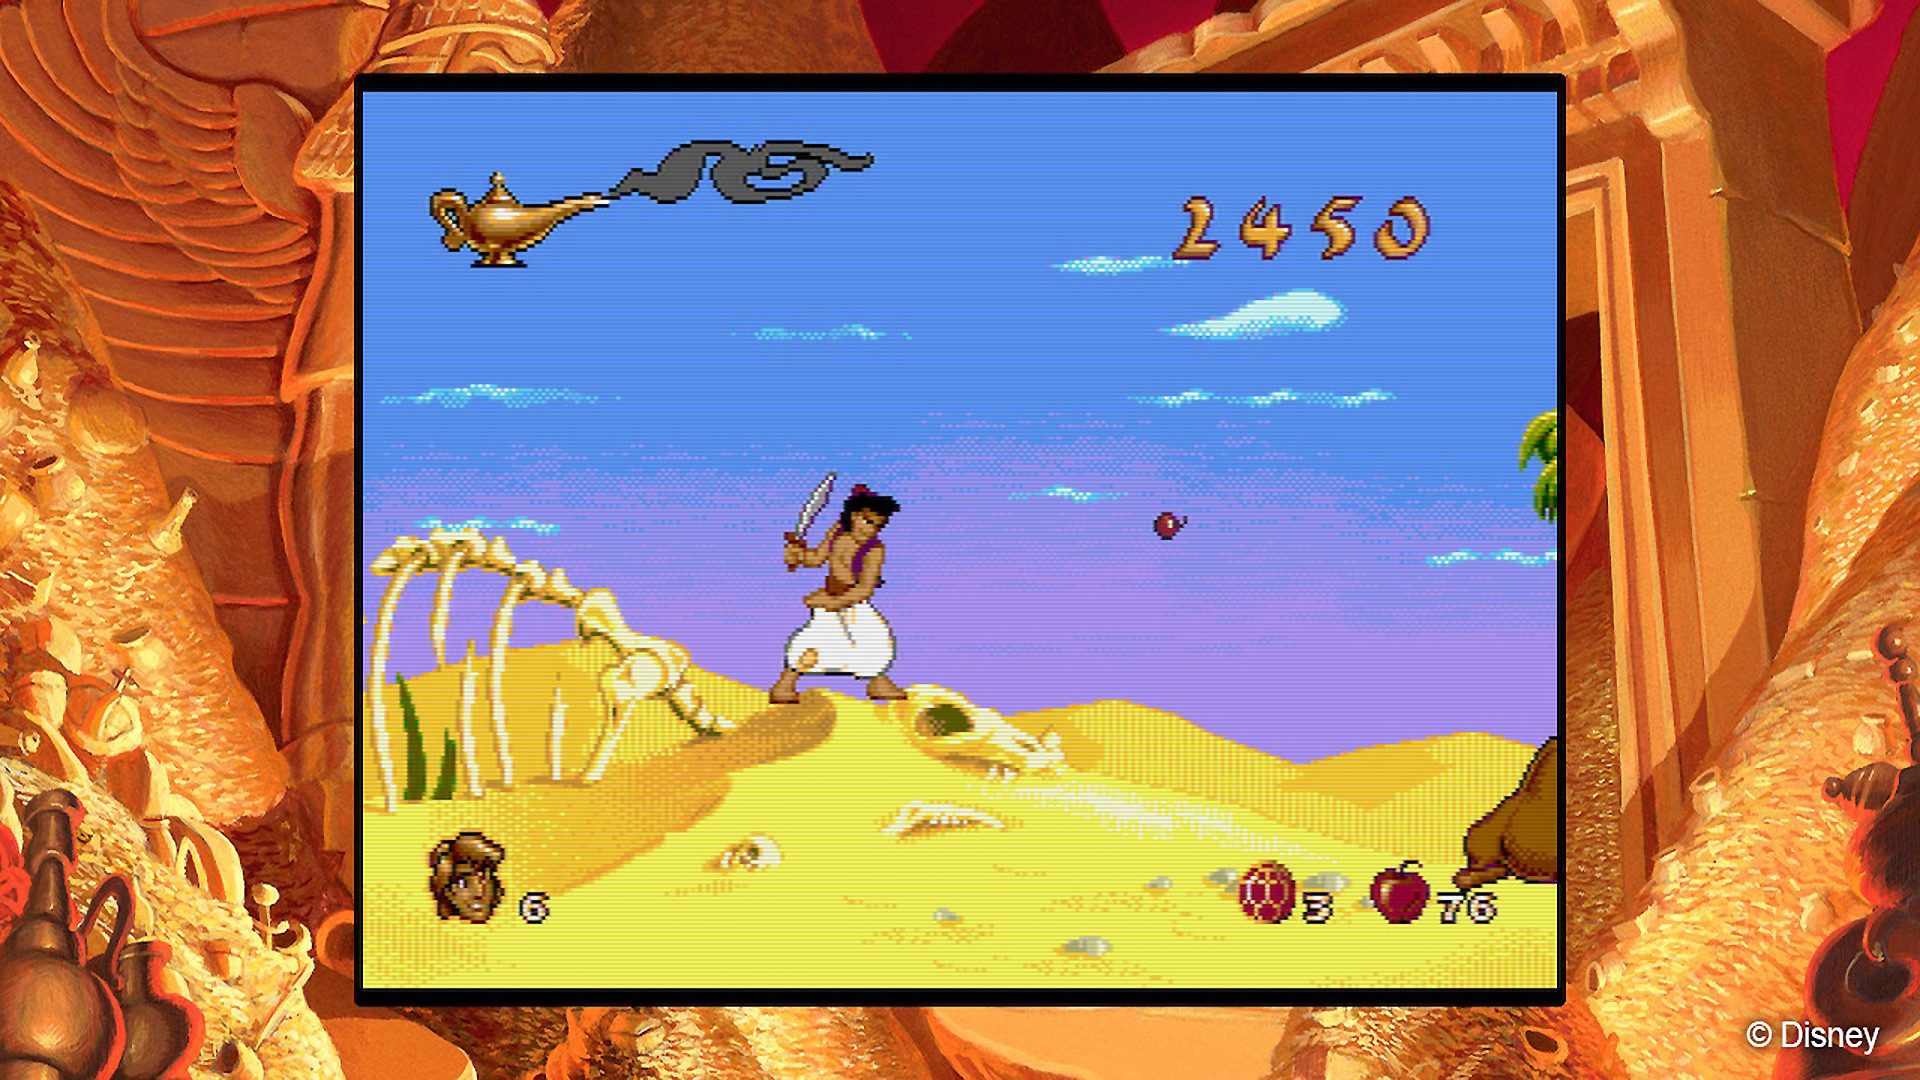 Aladdin Game For PC Full Version